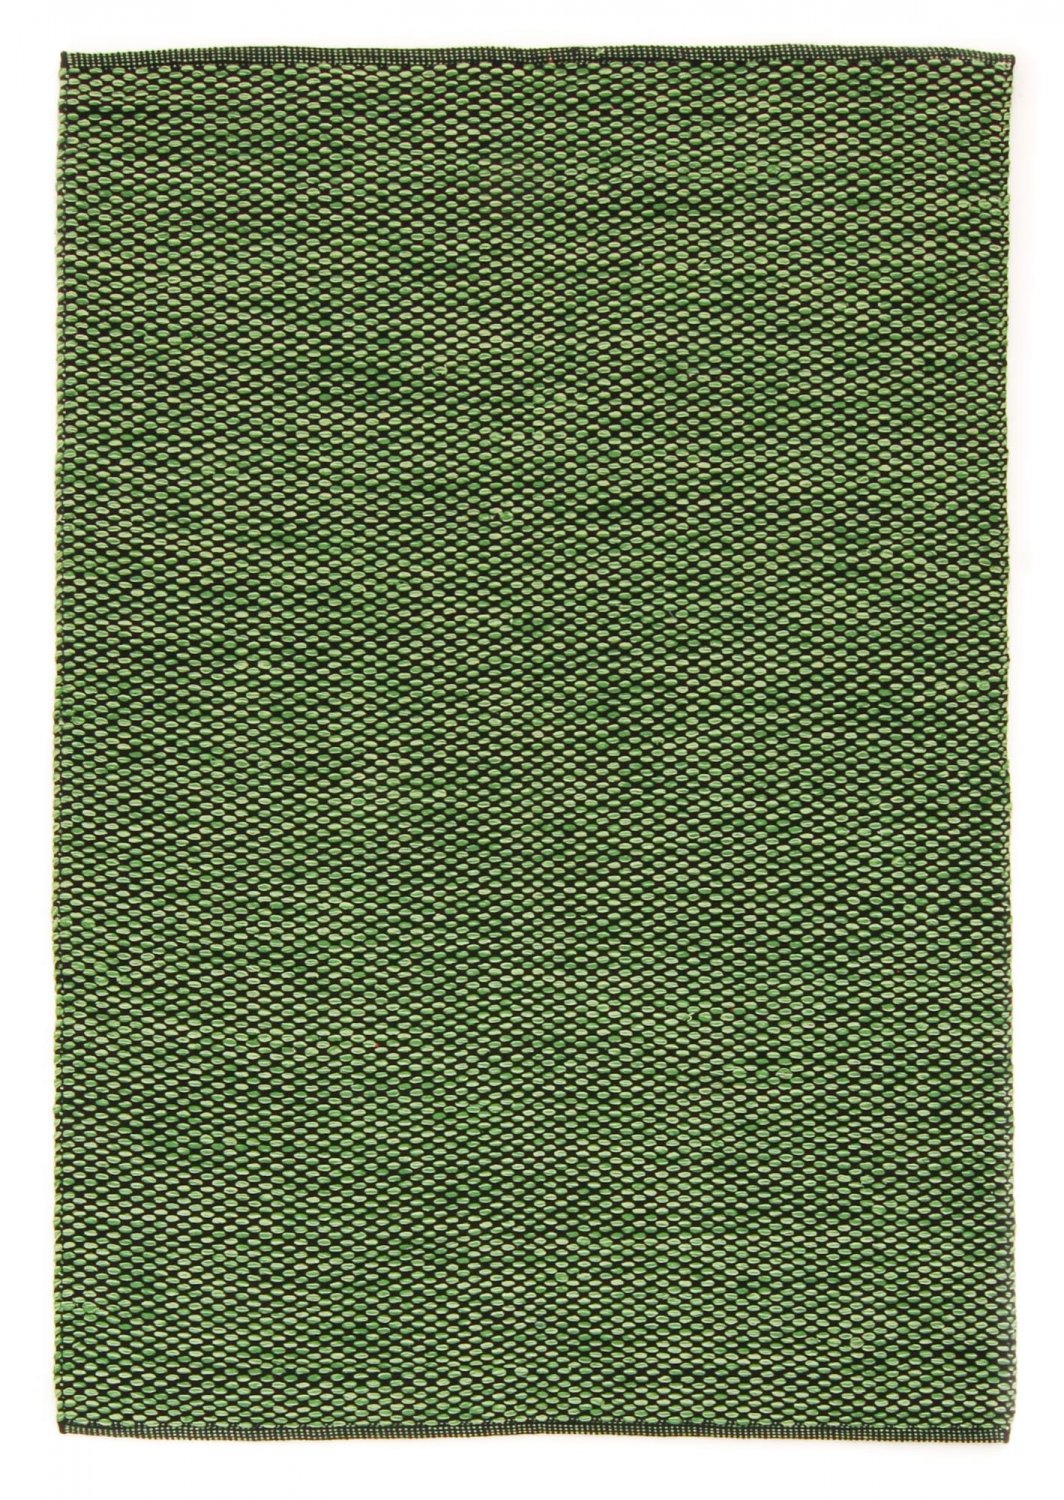 Voddenkleed - Tuva (groen)